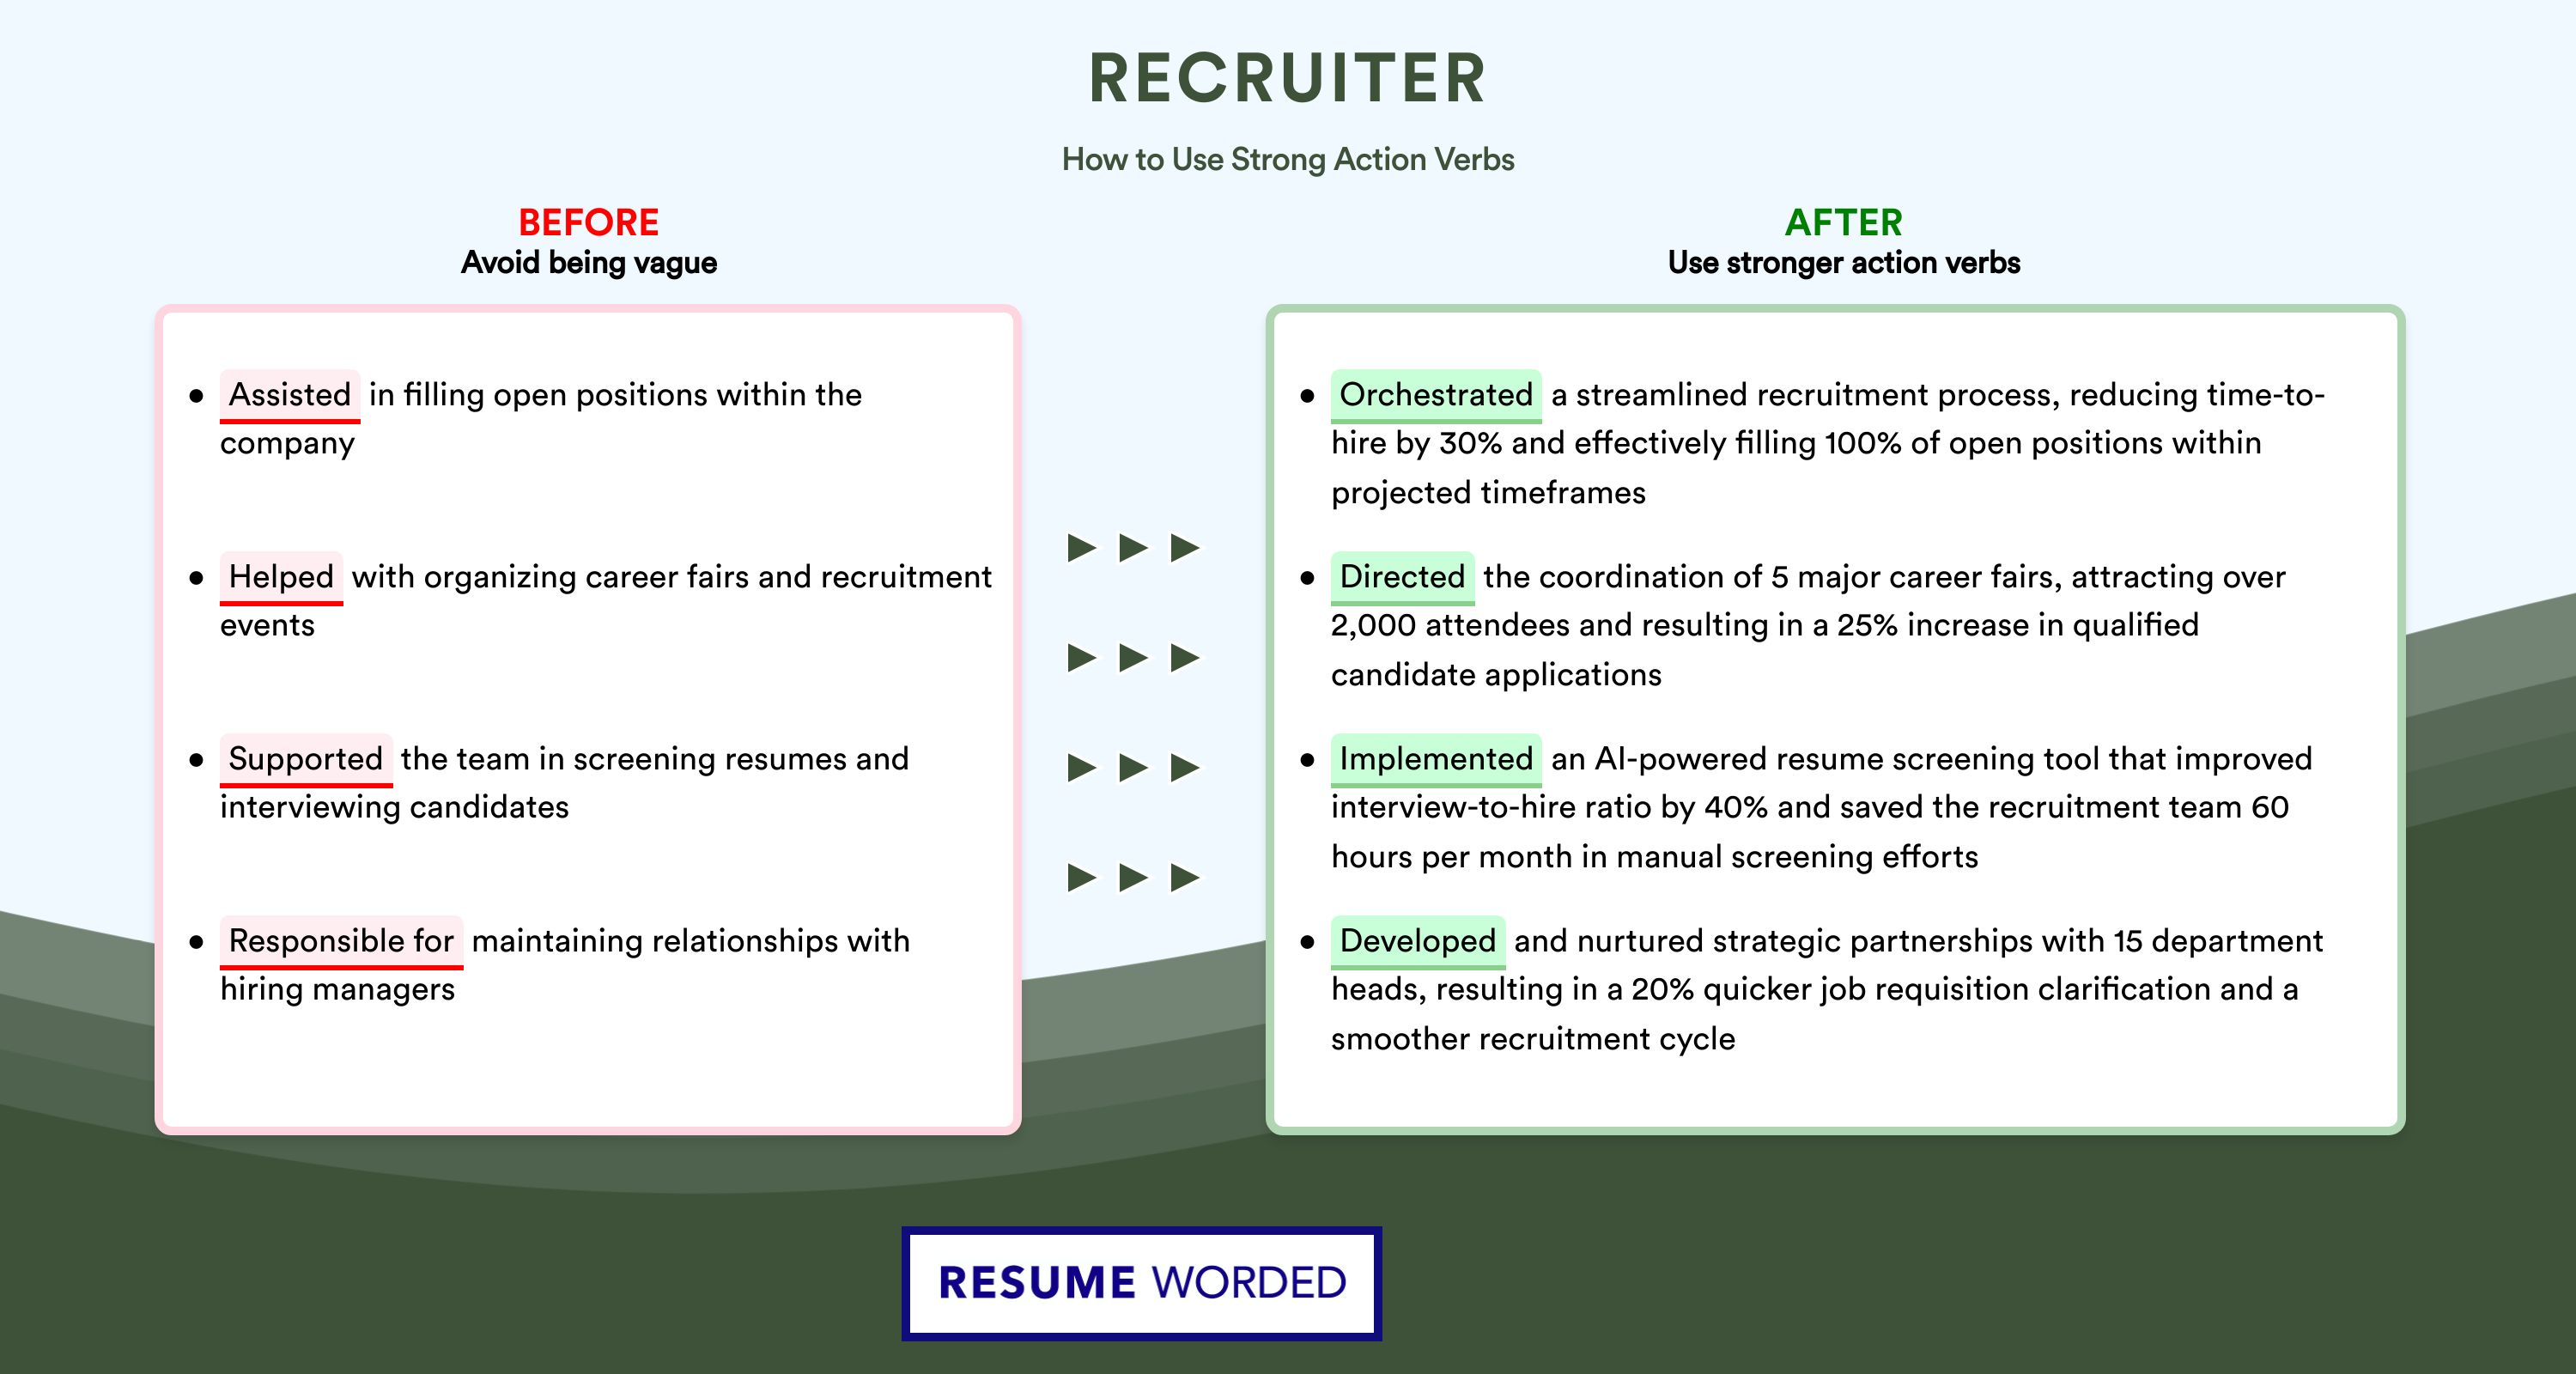 Action Verbs for Recruiter